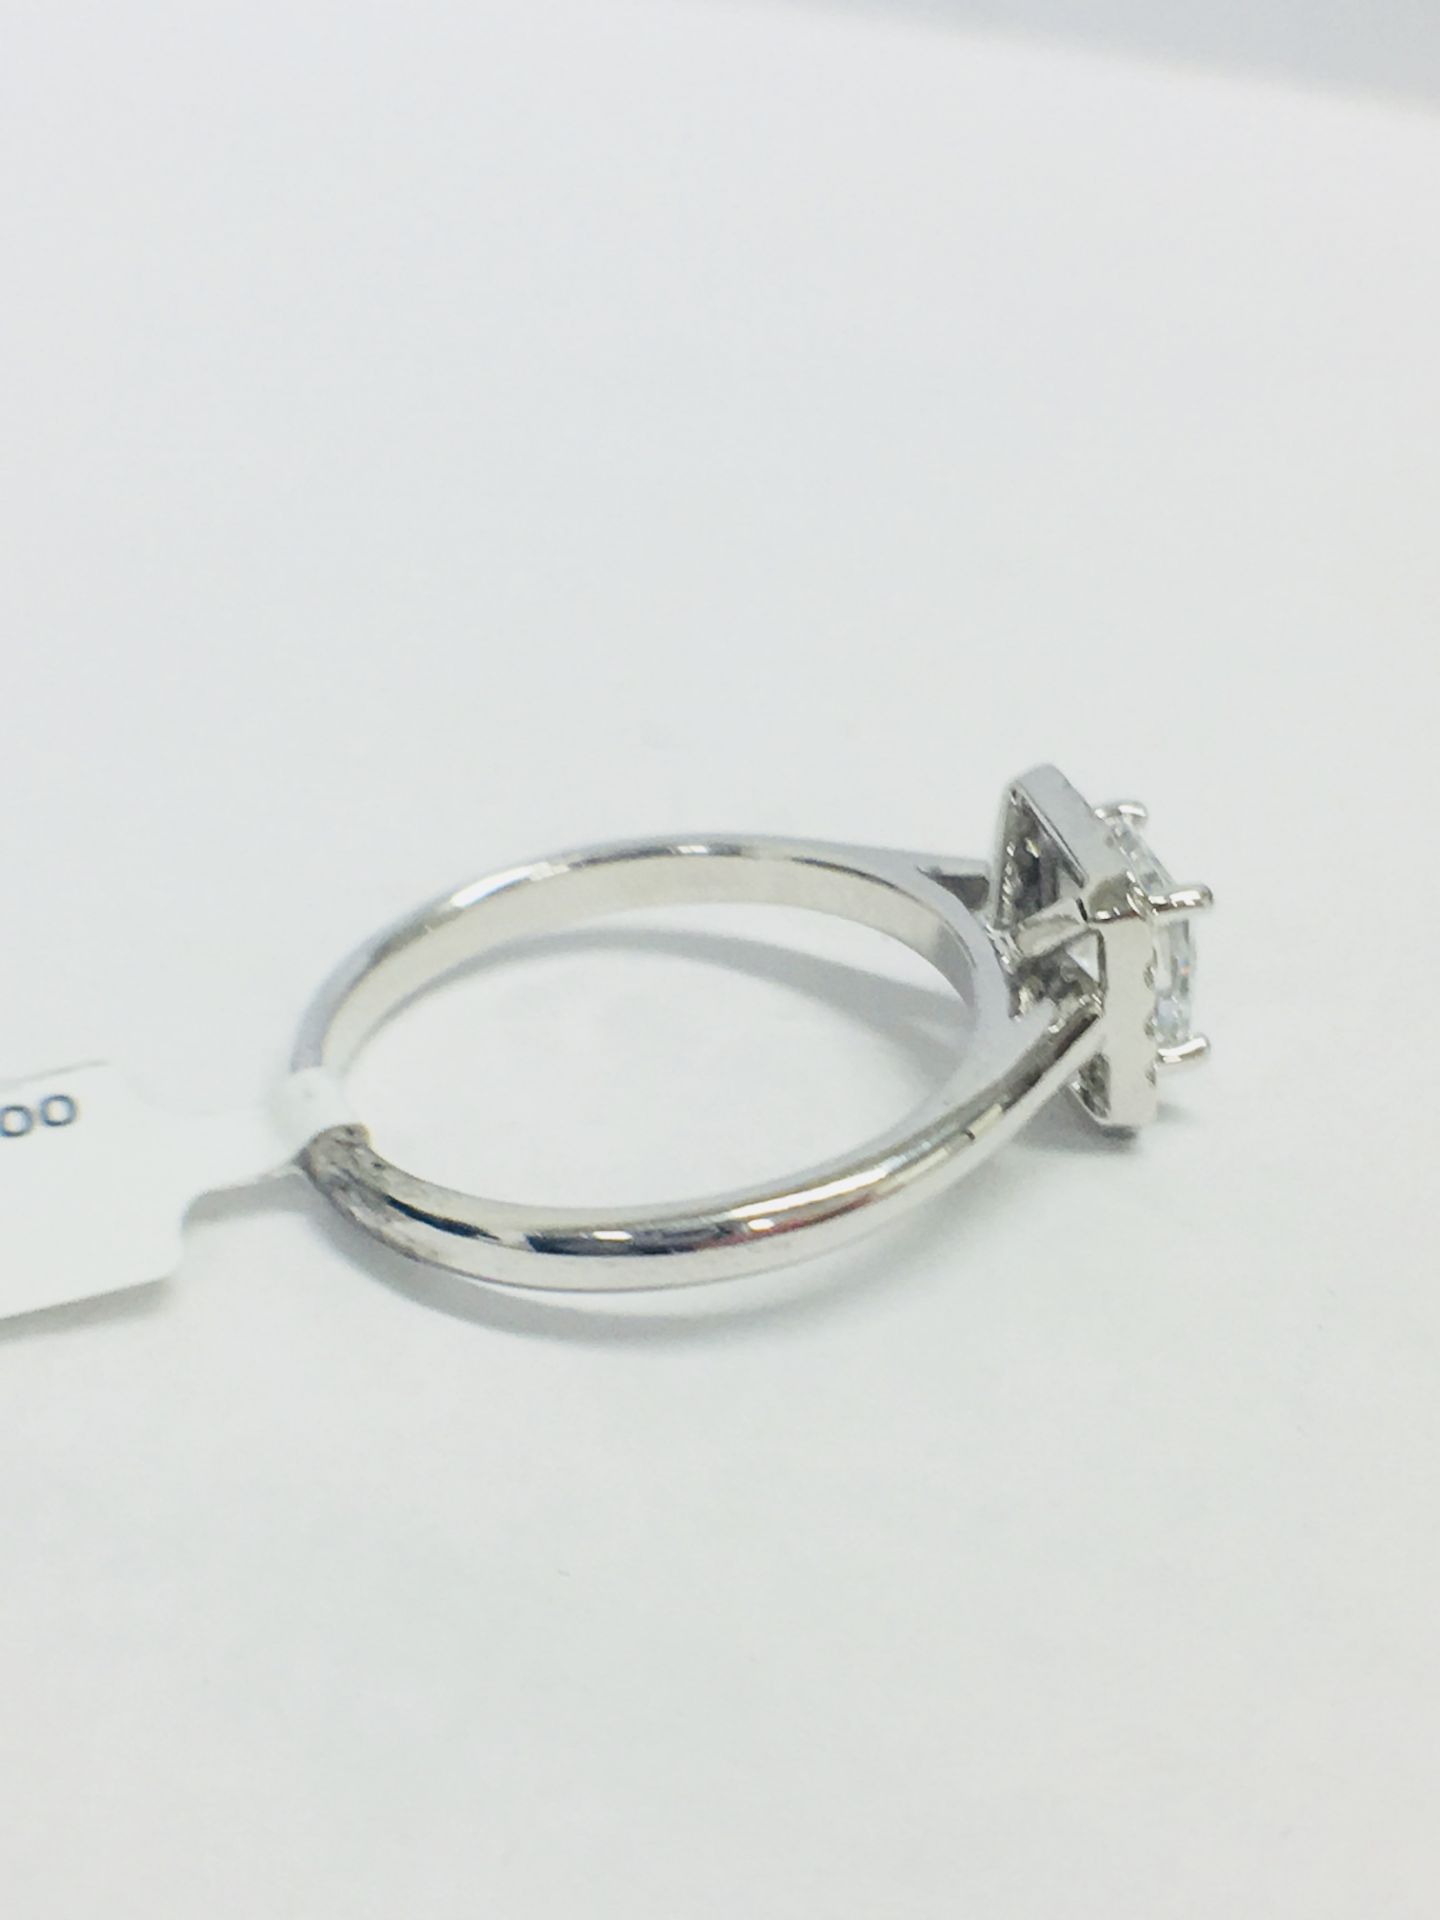 Platinum Princess cut Diamond Ring,1ct Princess cut natural diamond,h colour,si1 clarity,16 round - Image 6 of 8